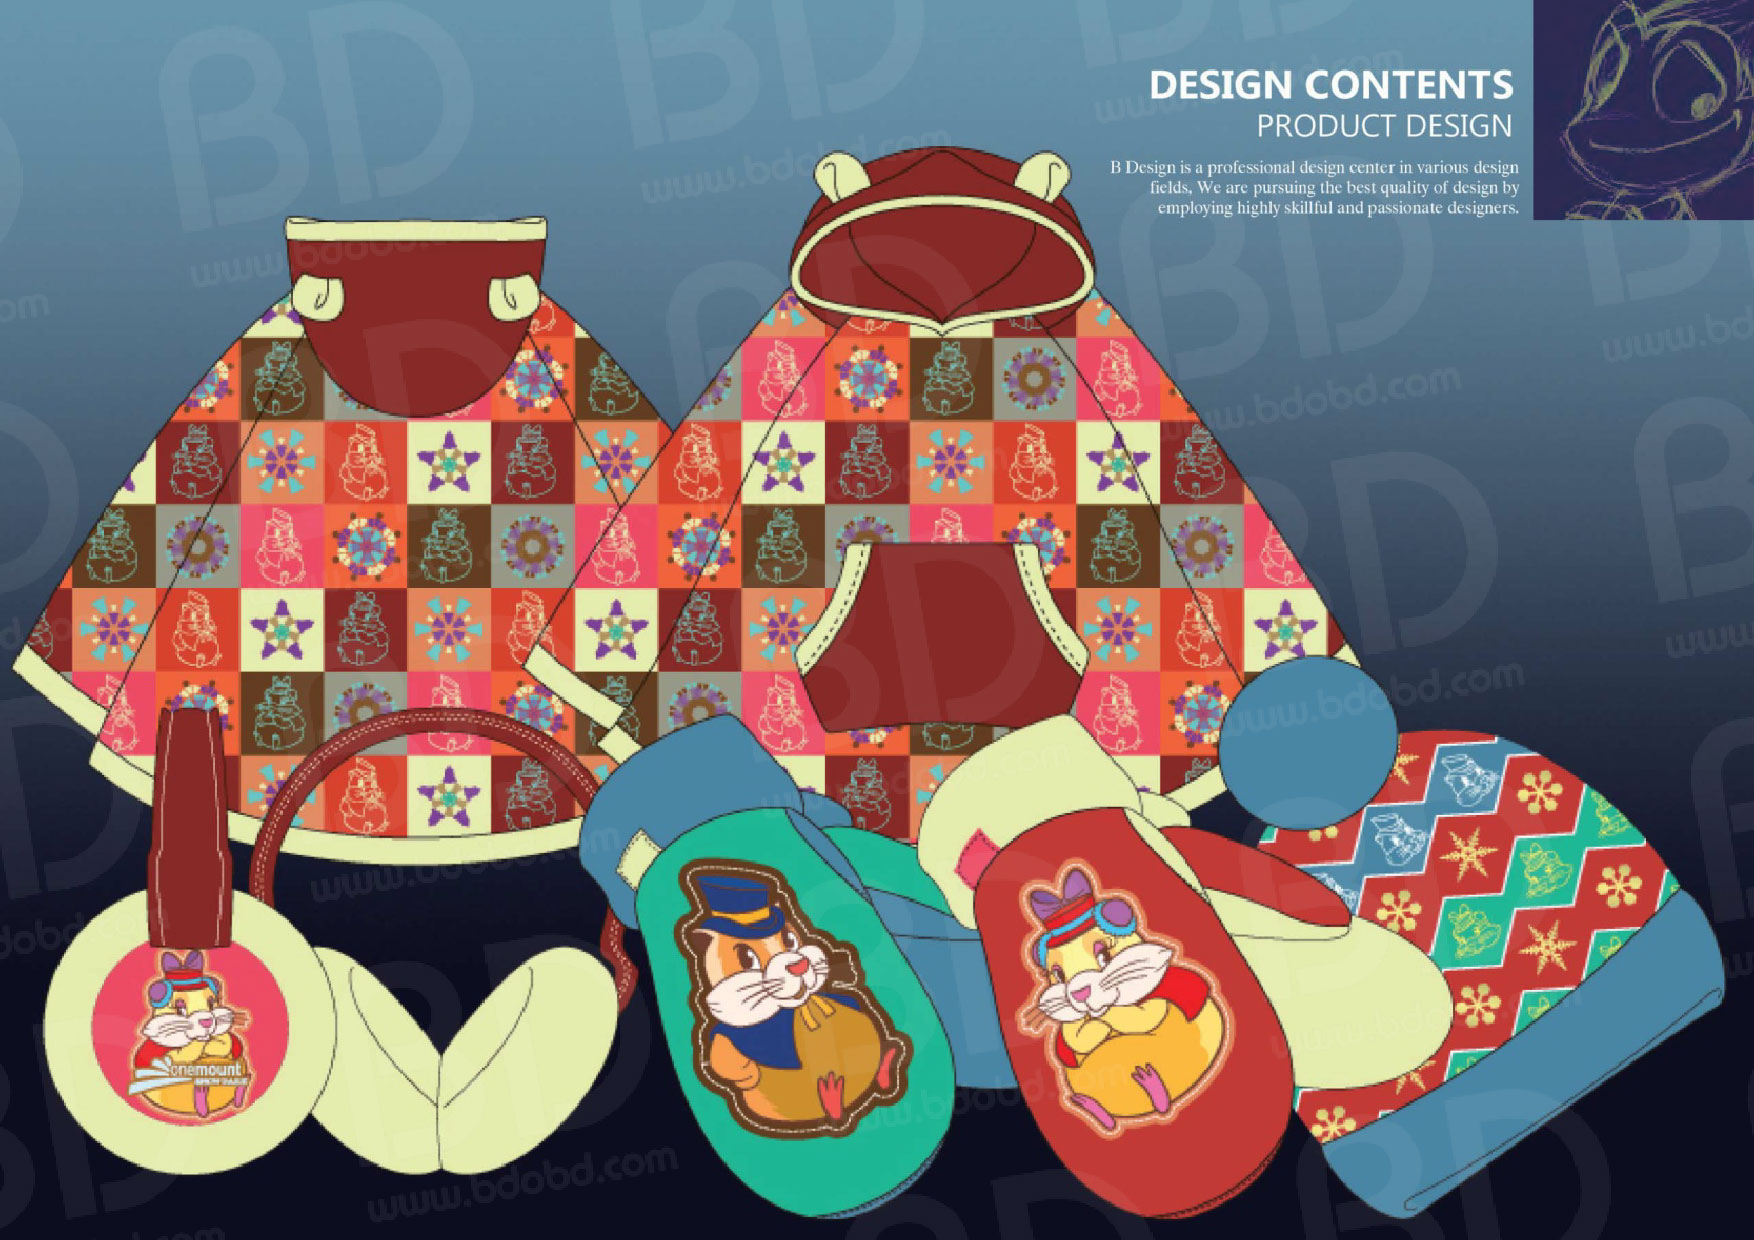 contentsdesign2 (14)